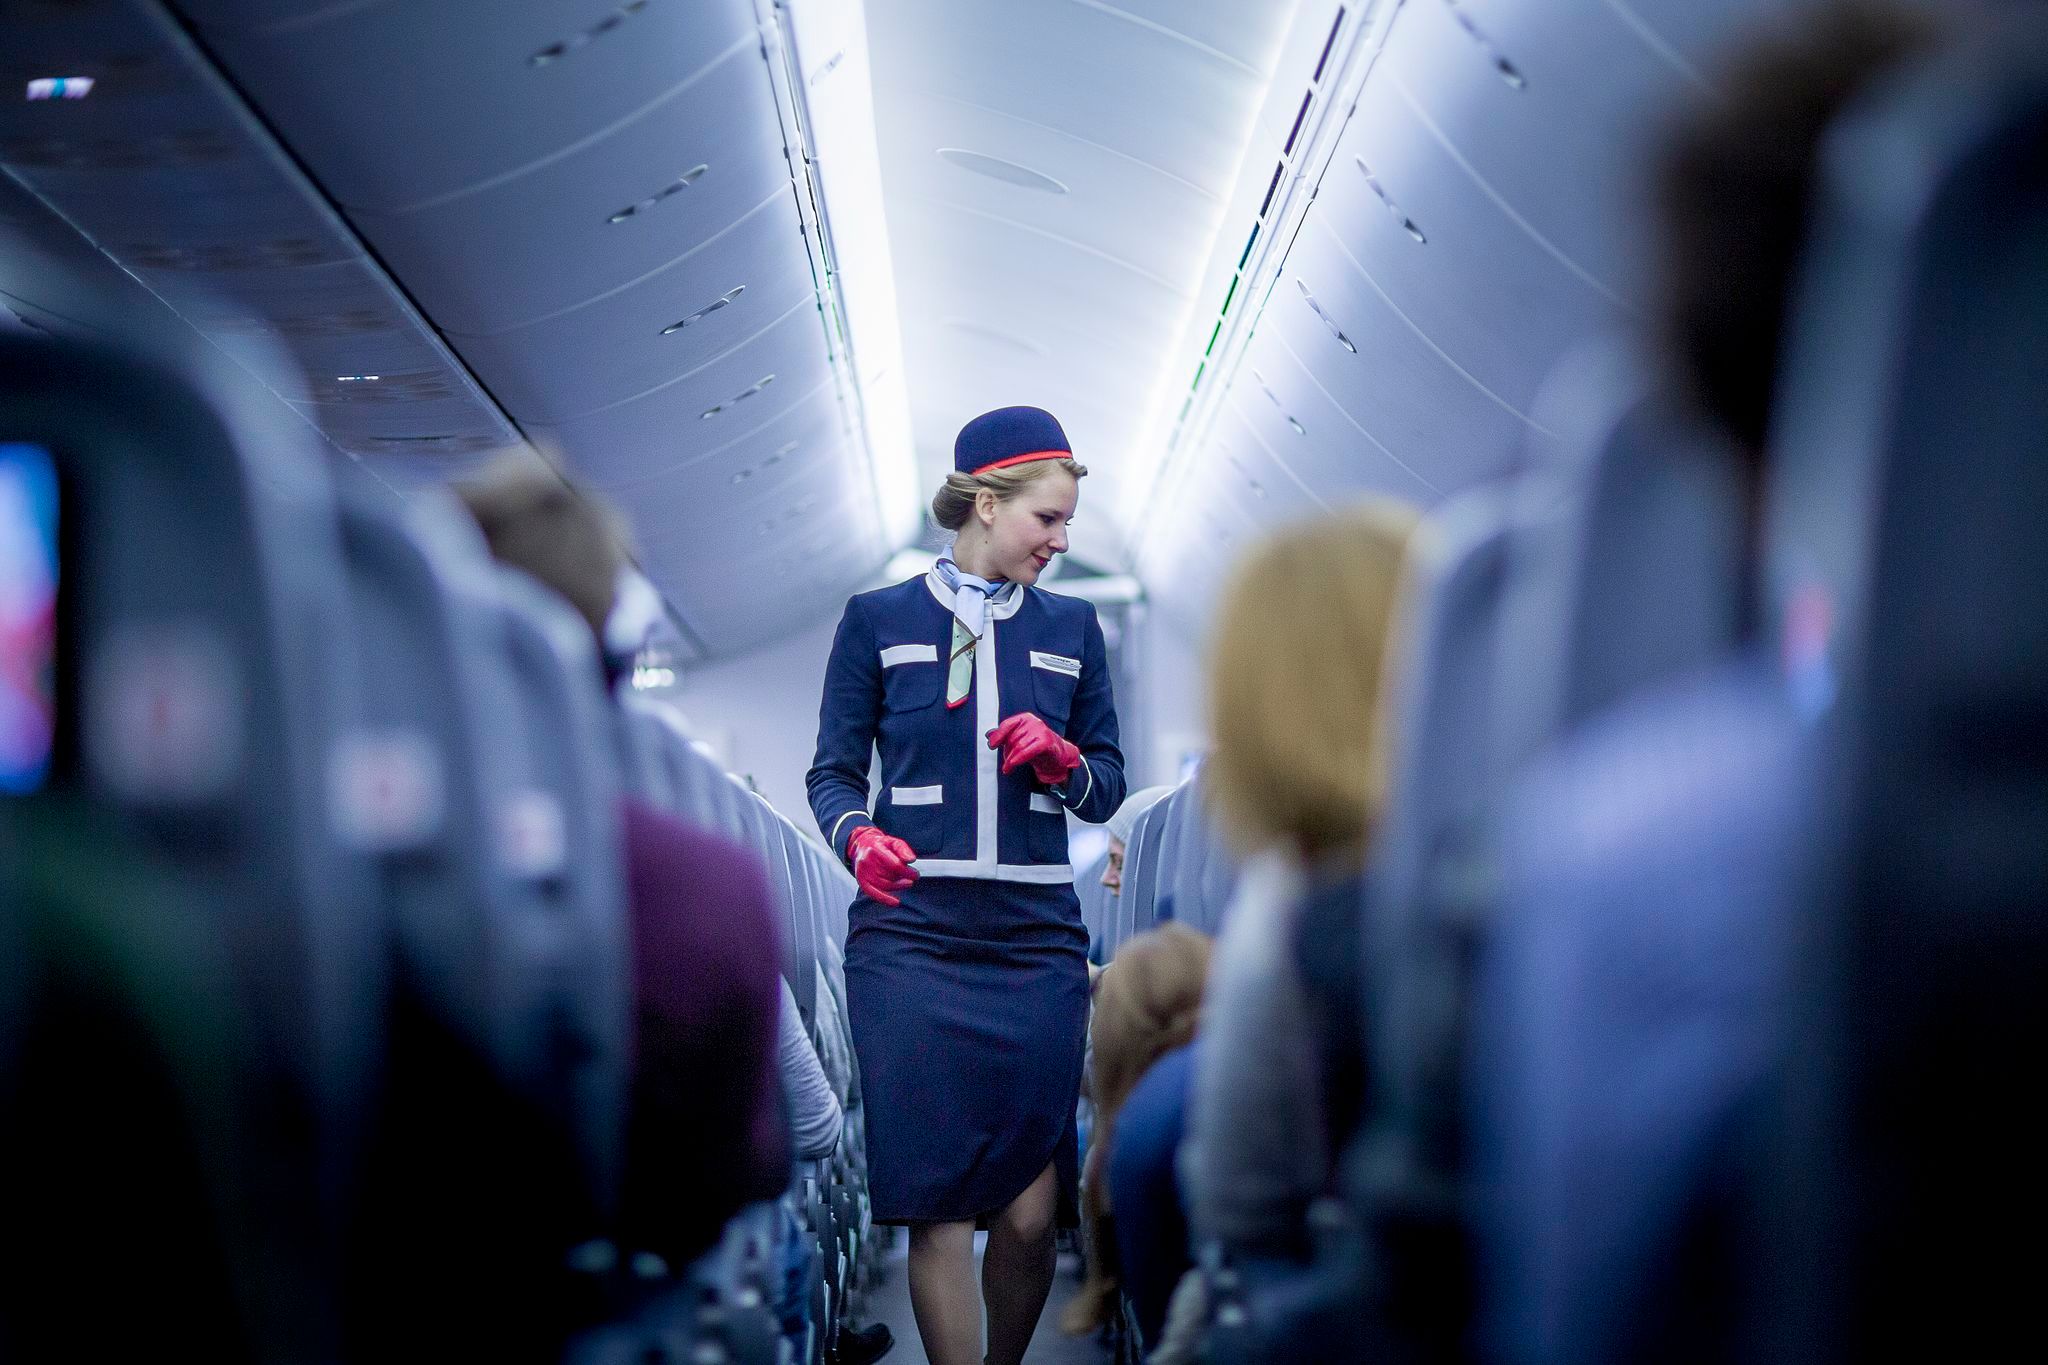 Norwegian flight attendant moving through the cabin.